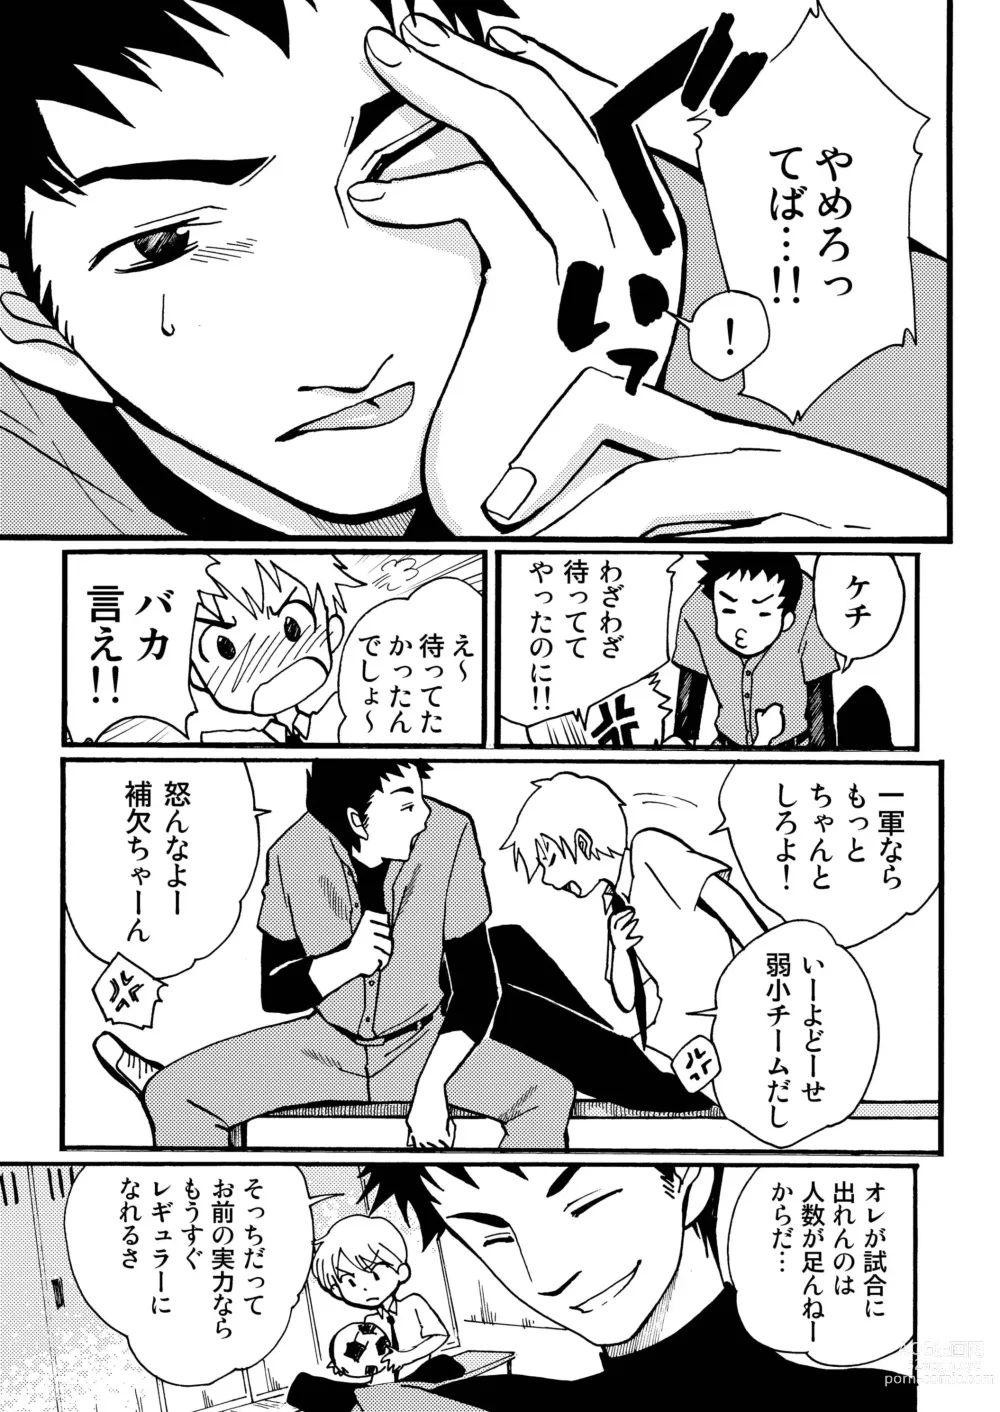 Page 5 of doujinshi Suki!